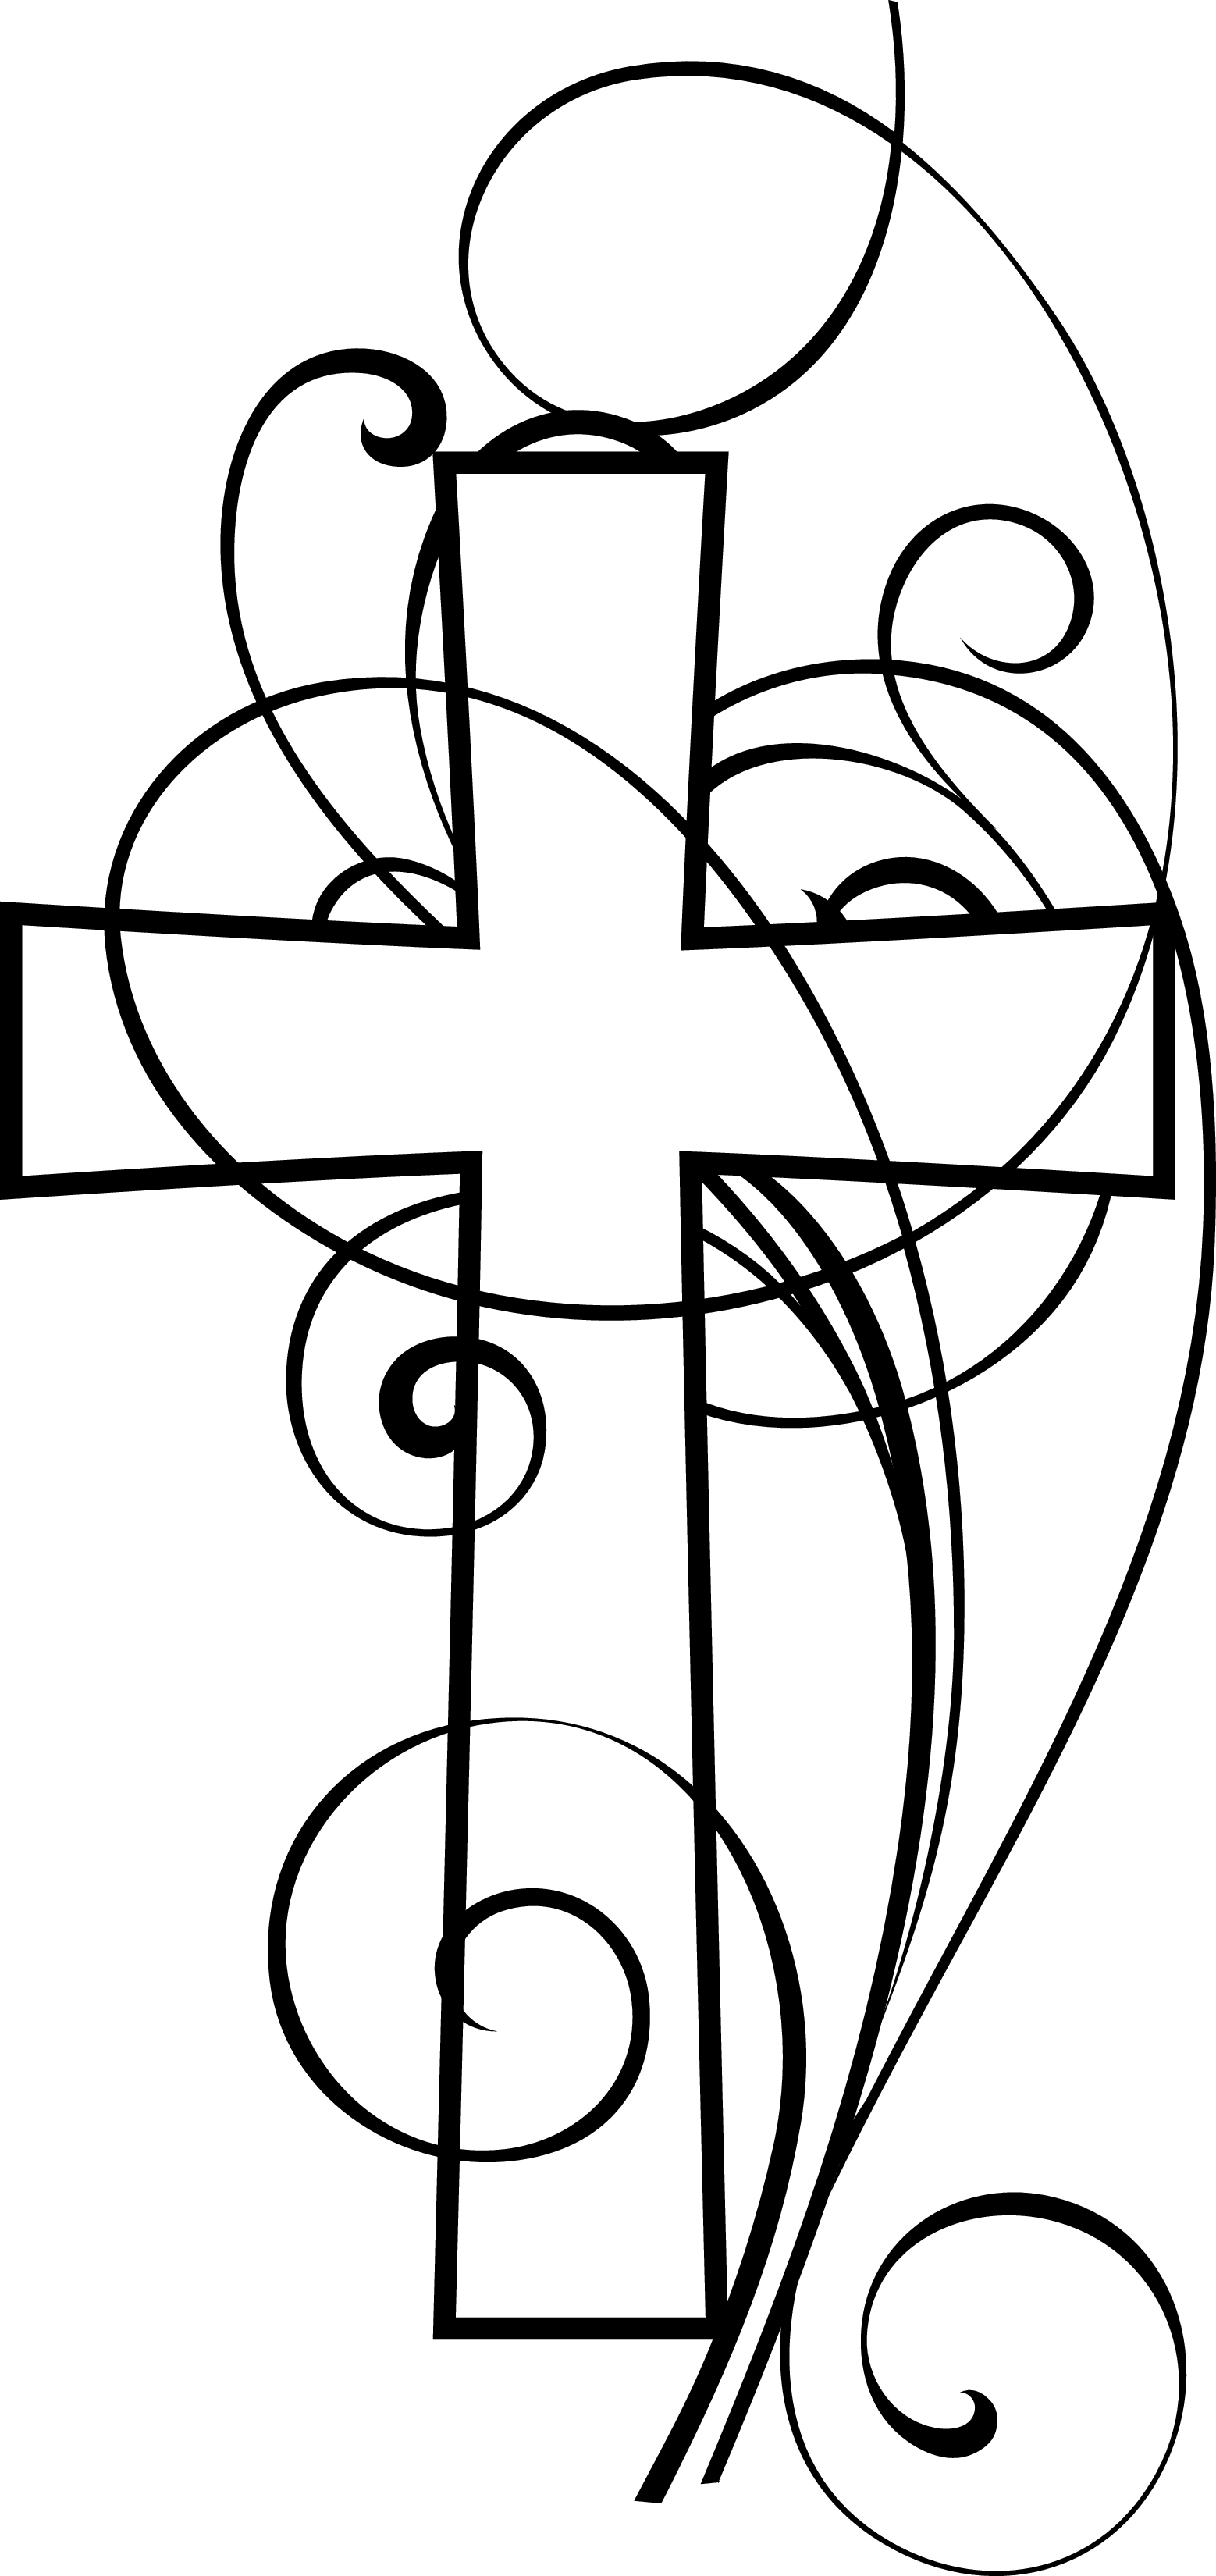 Clip art catholic for bulletins